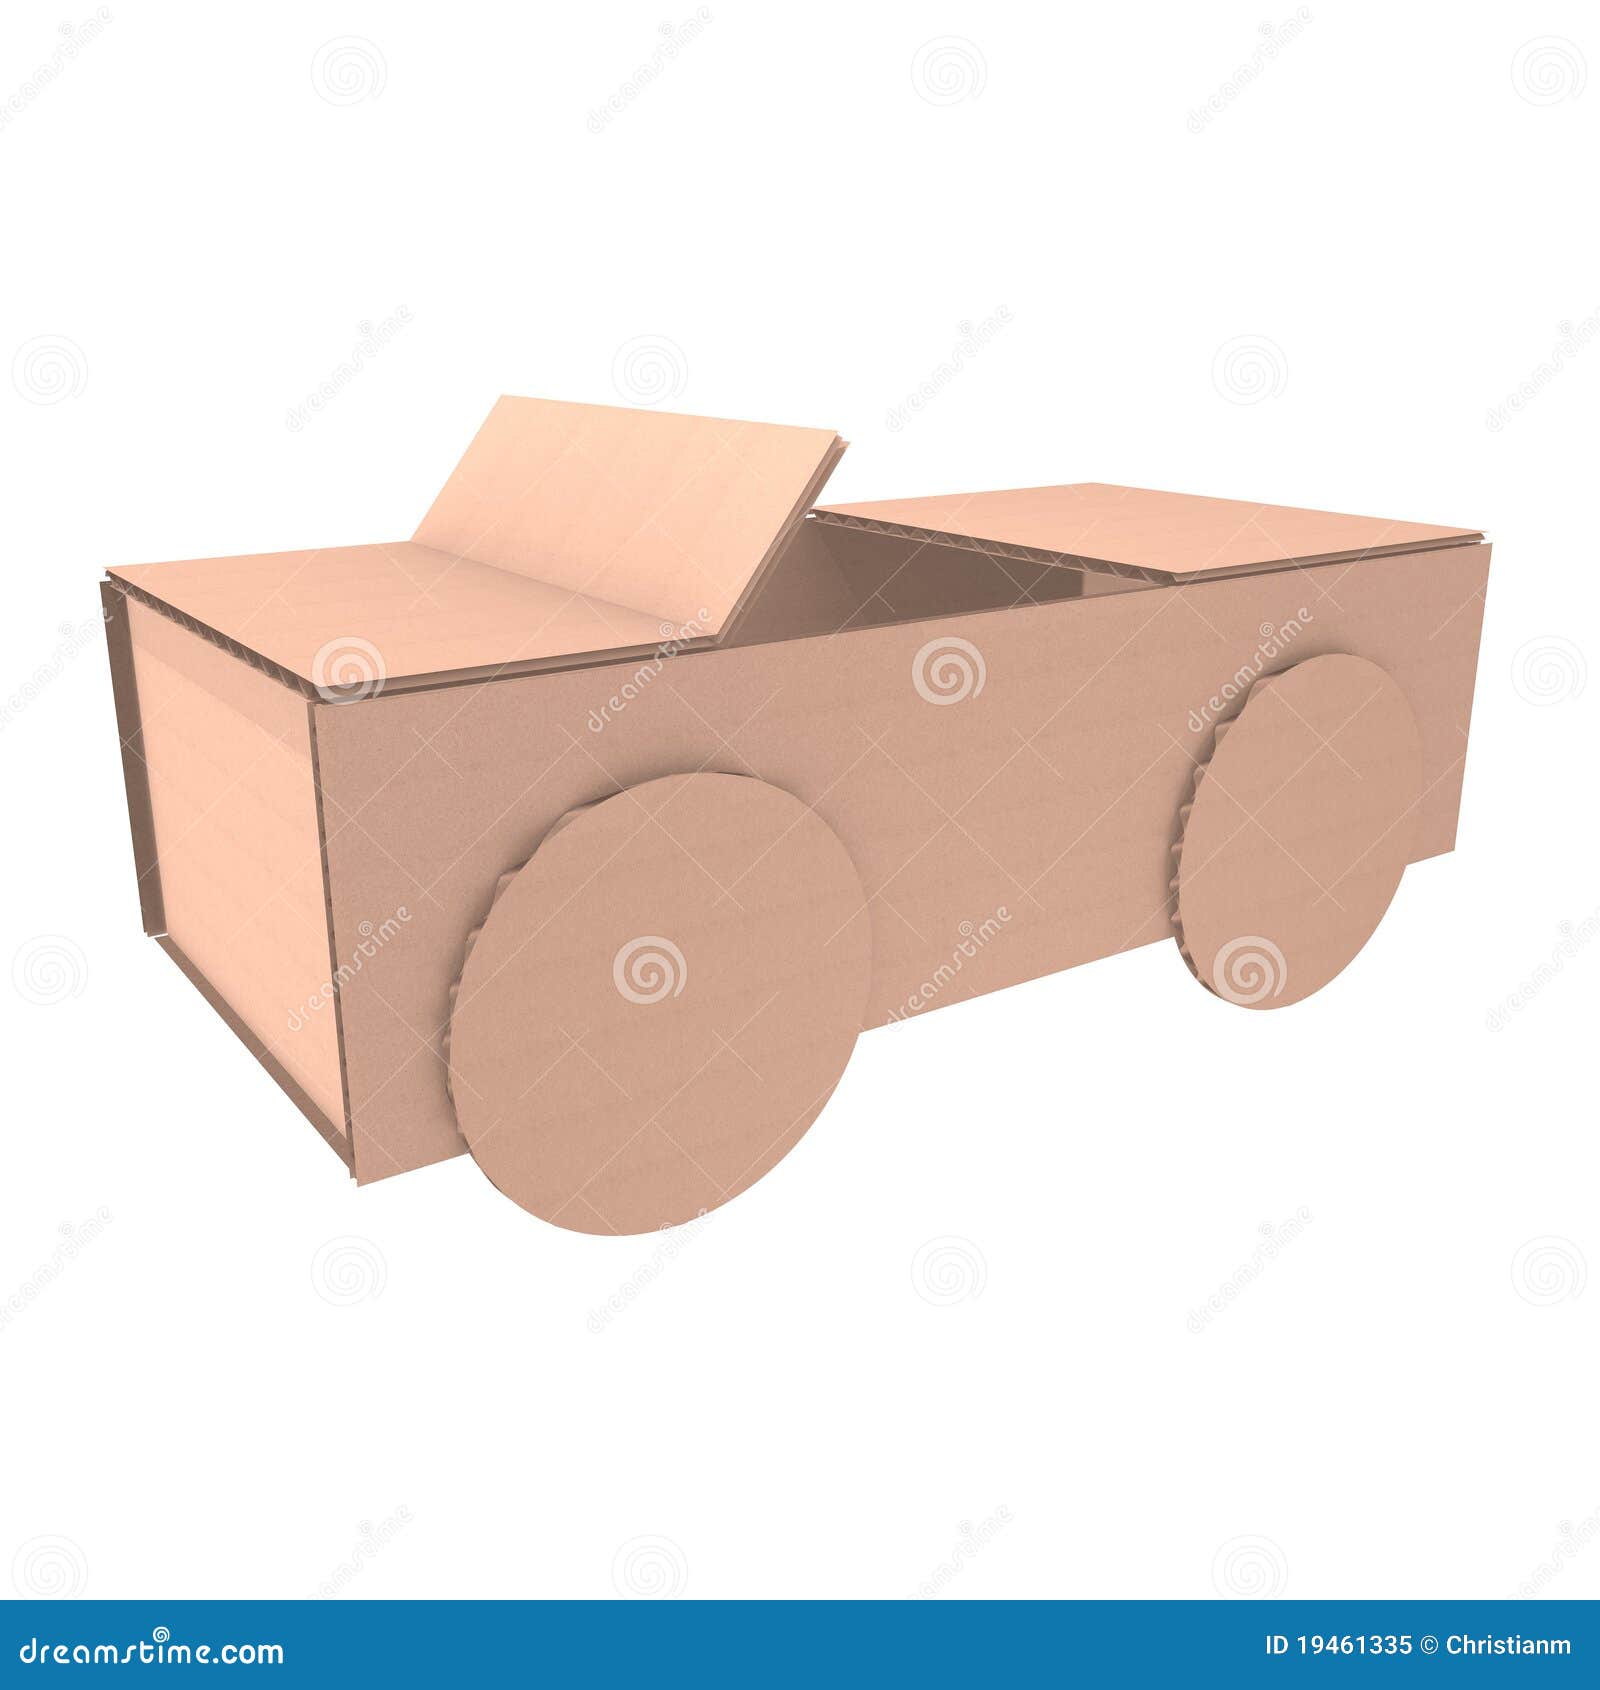 Cardboard Cars Templates